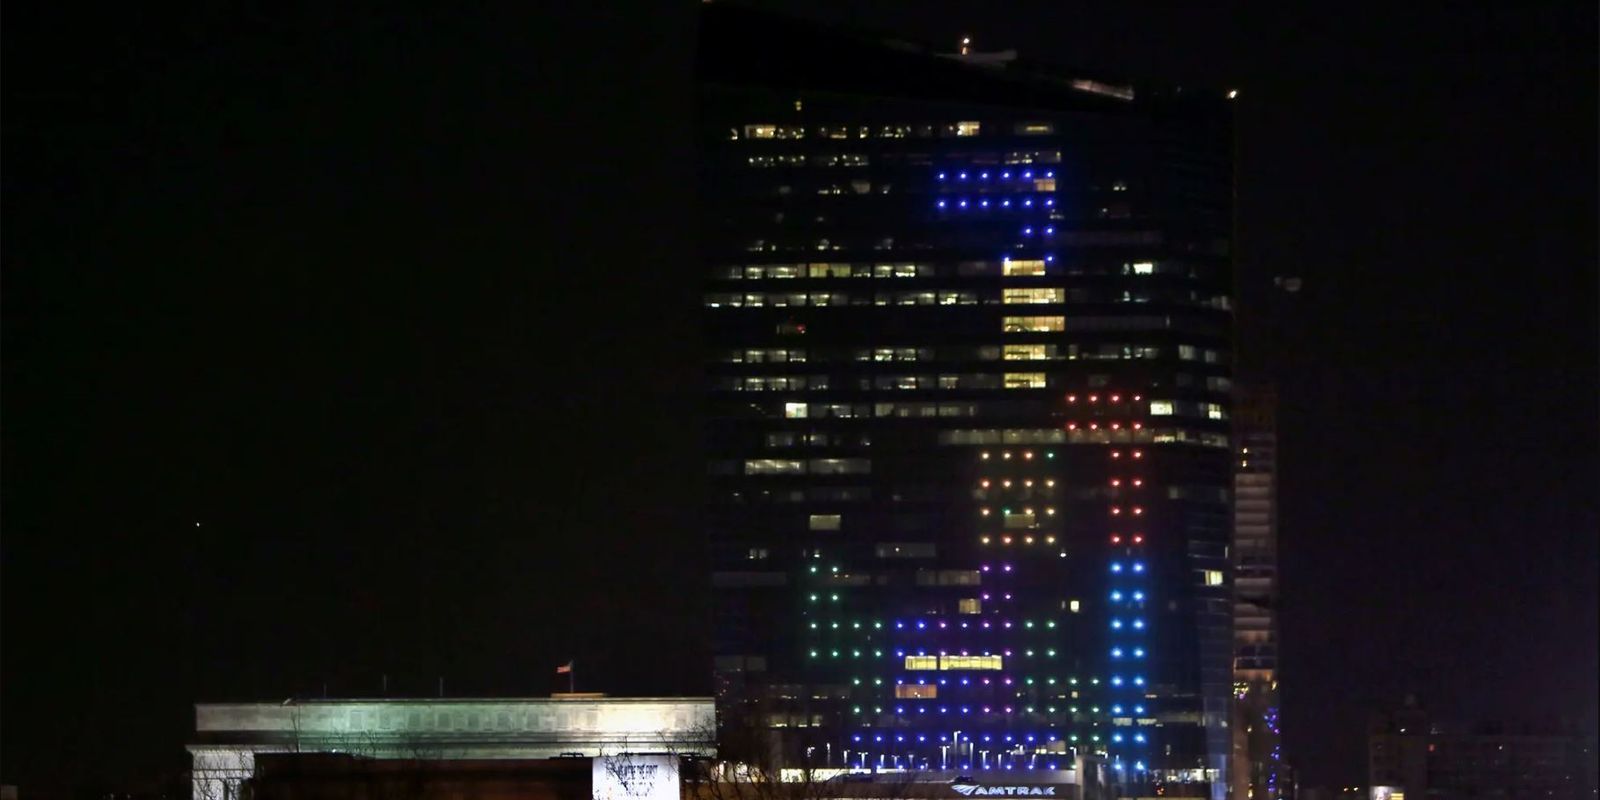 Tetris On A Skyscraper, gedung pencakar langit besar dengan layar berwarna menyala